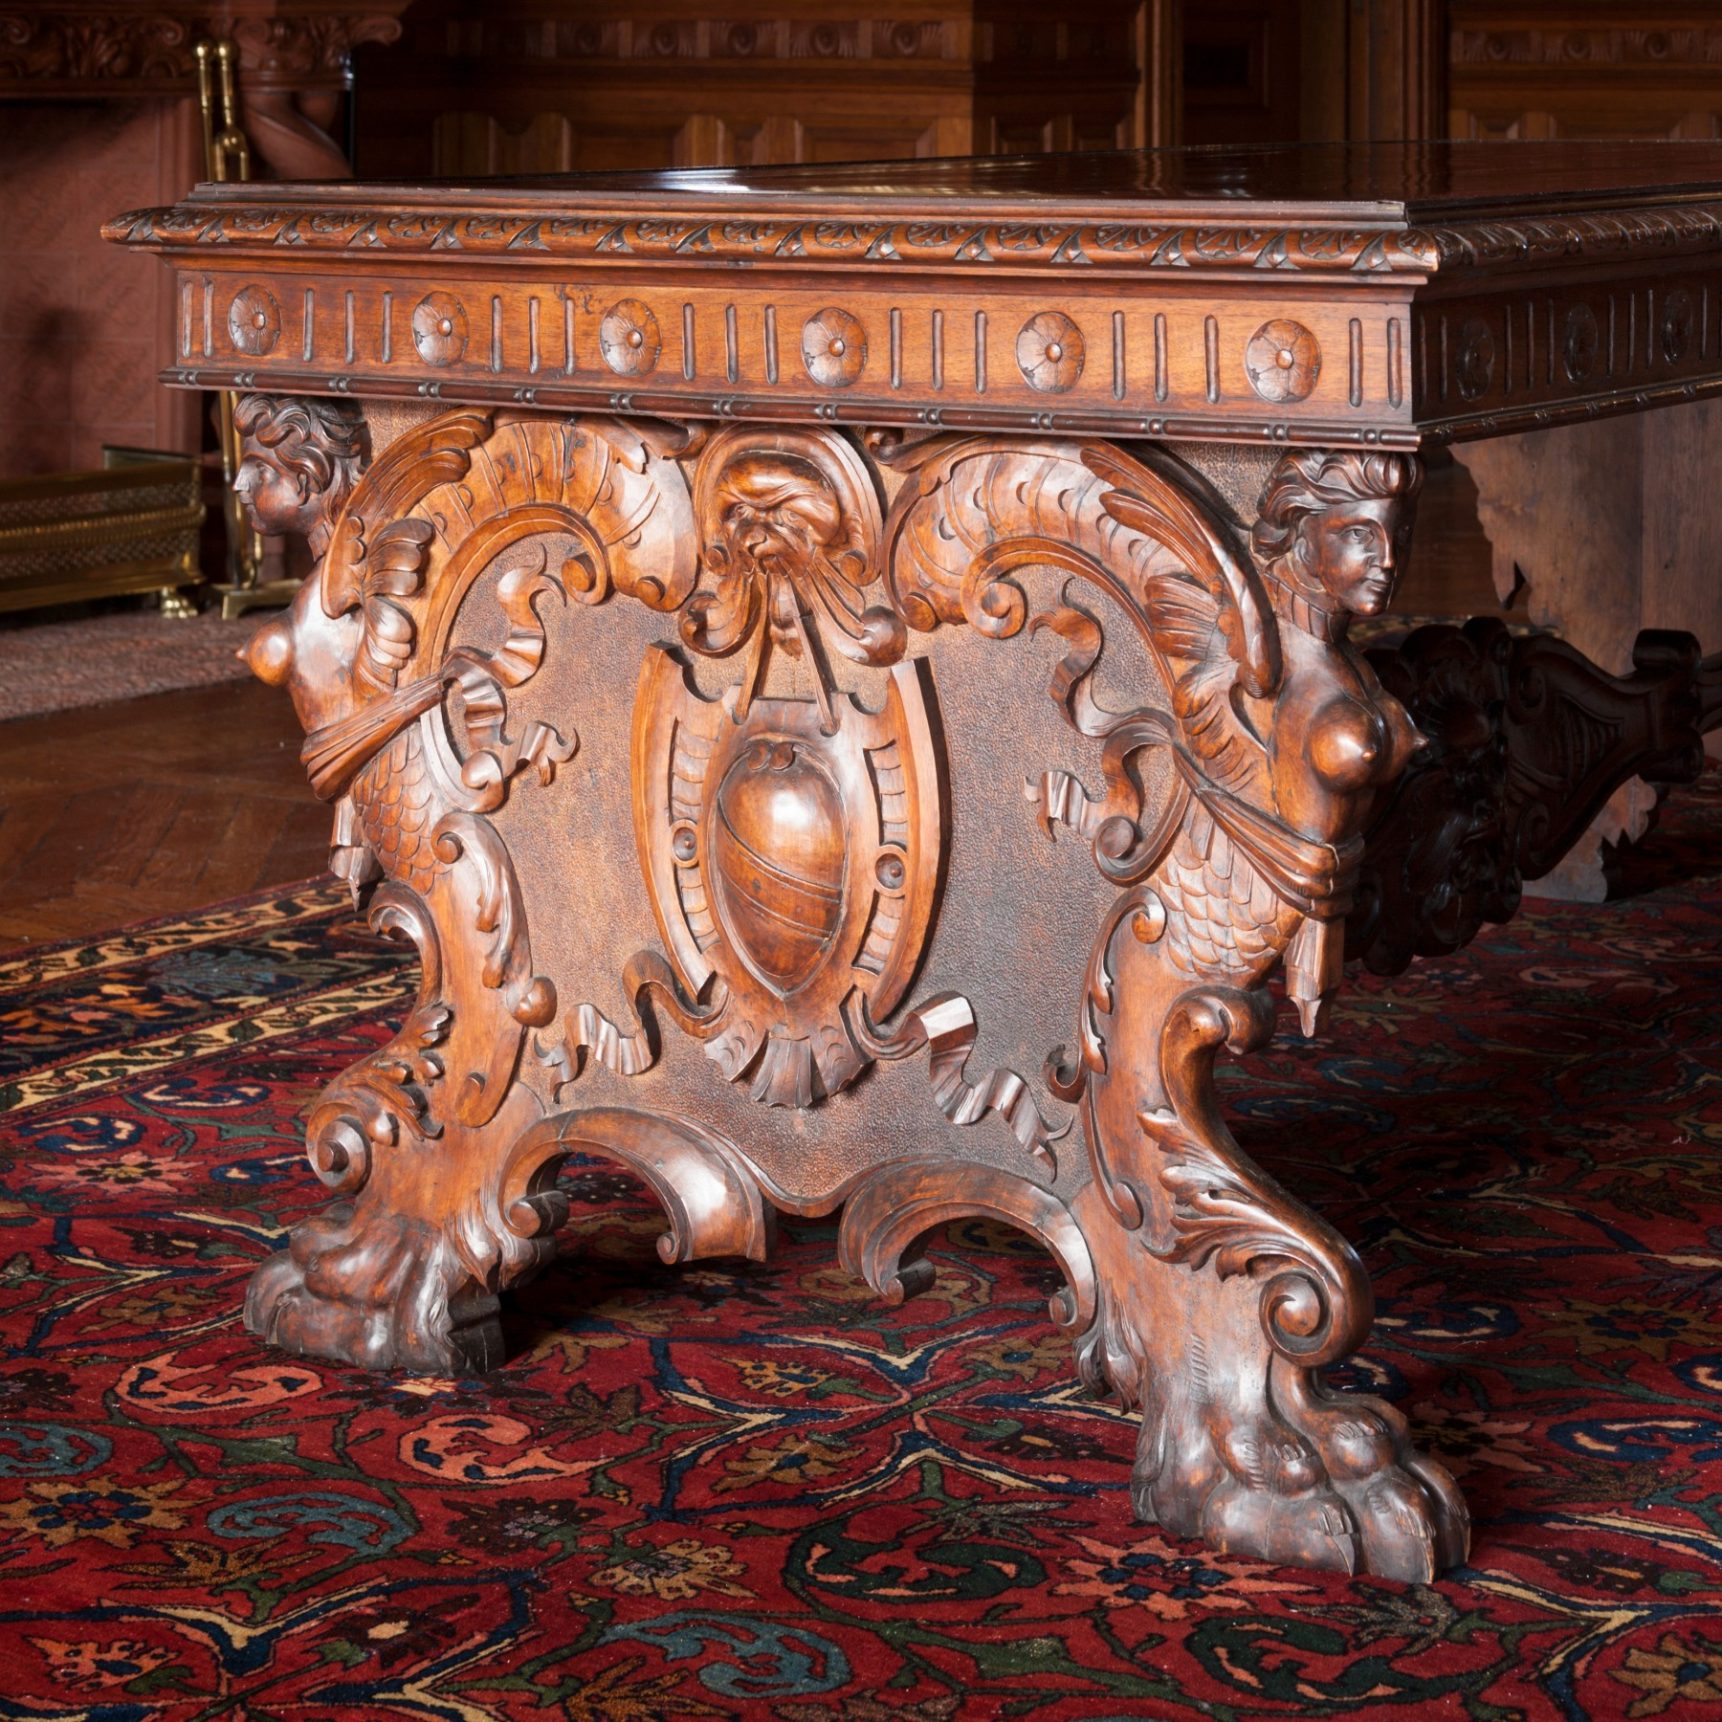 Ornately carved wooden table on carpet.